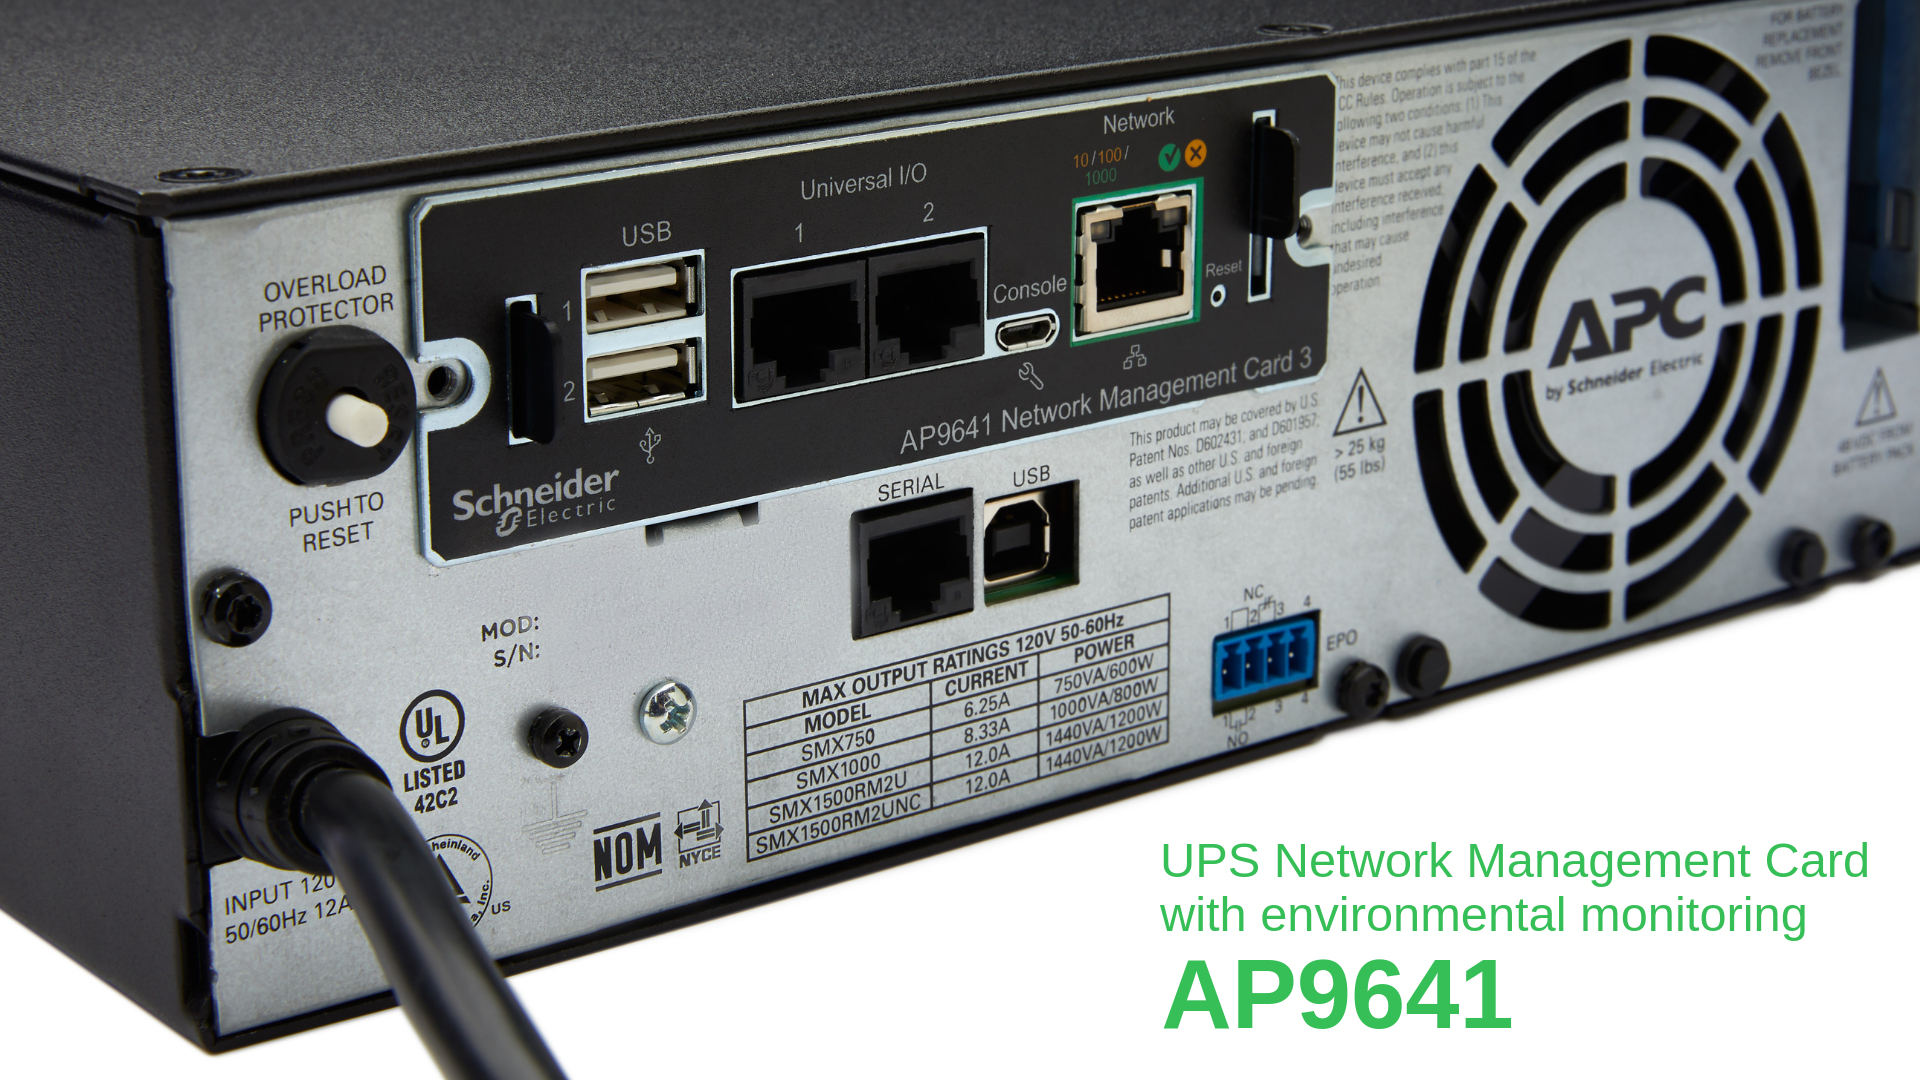 APC Network Management Card 3 with PowerChute Network Shutdown & Environmental Monitoring